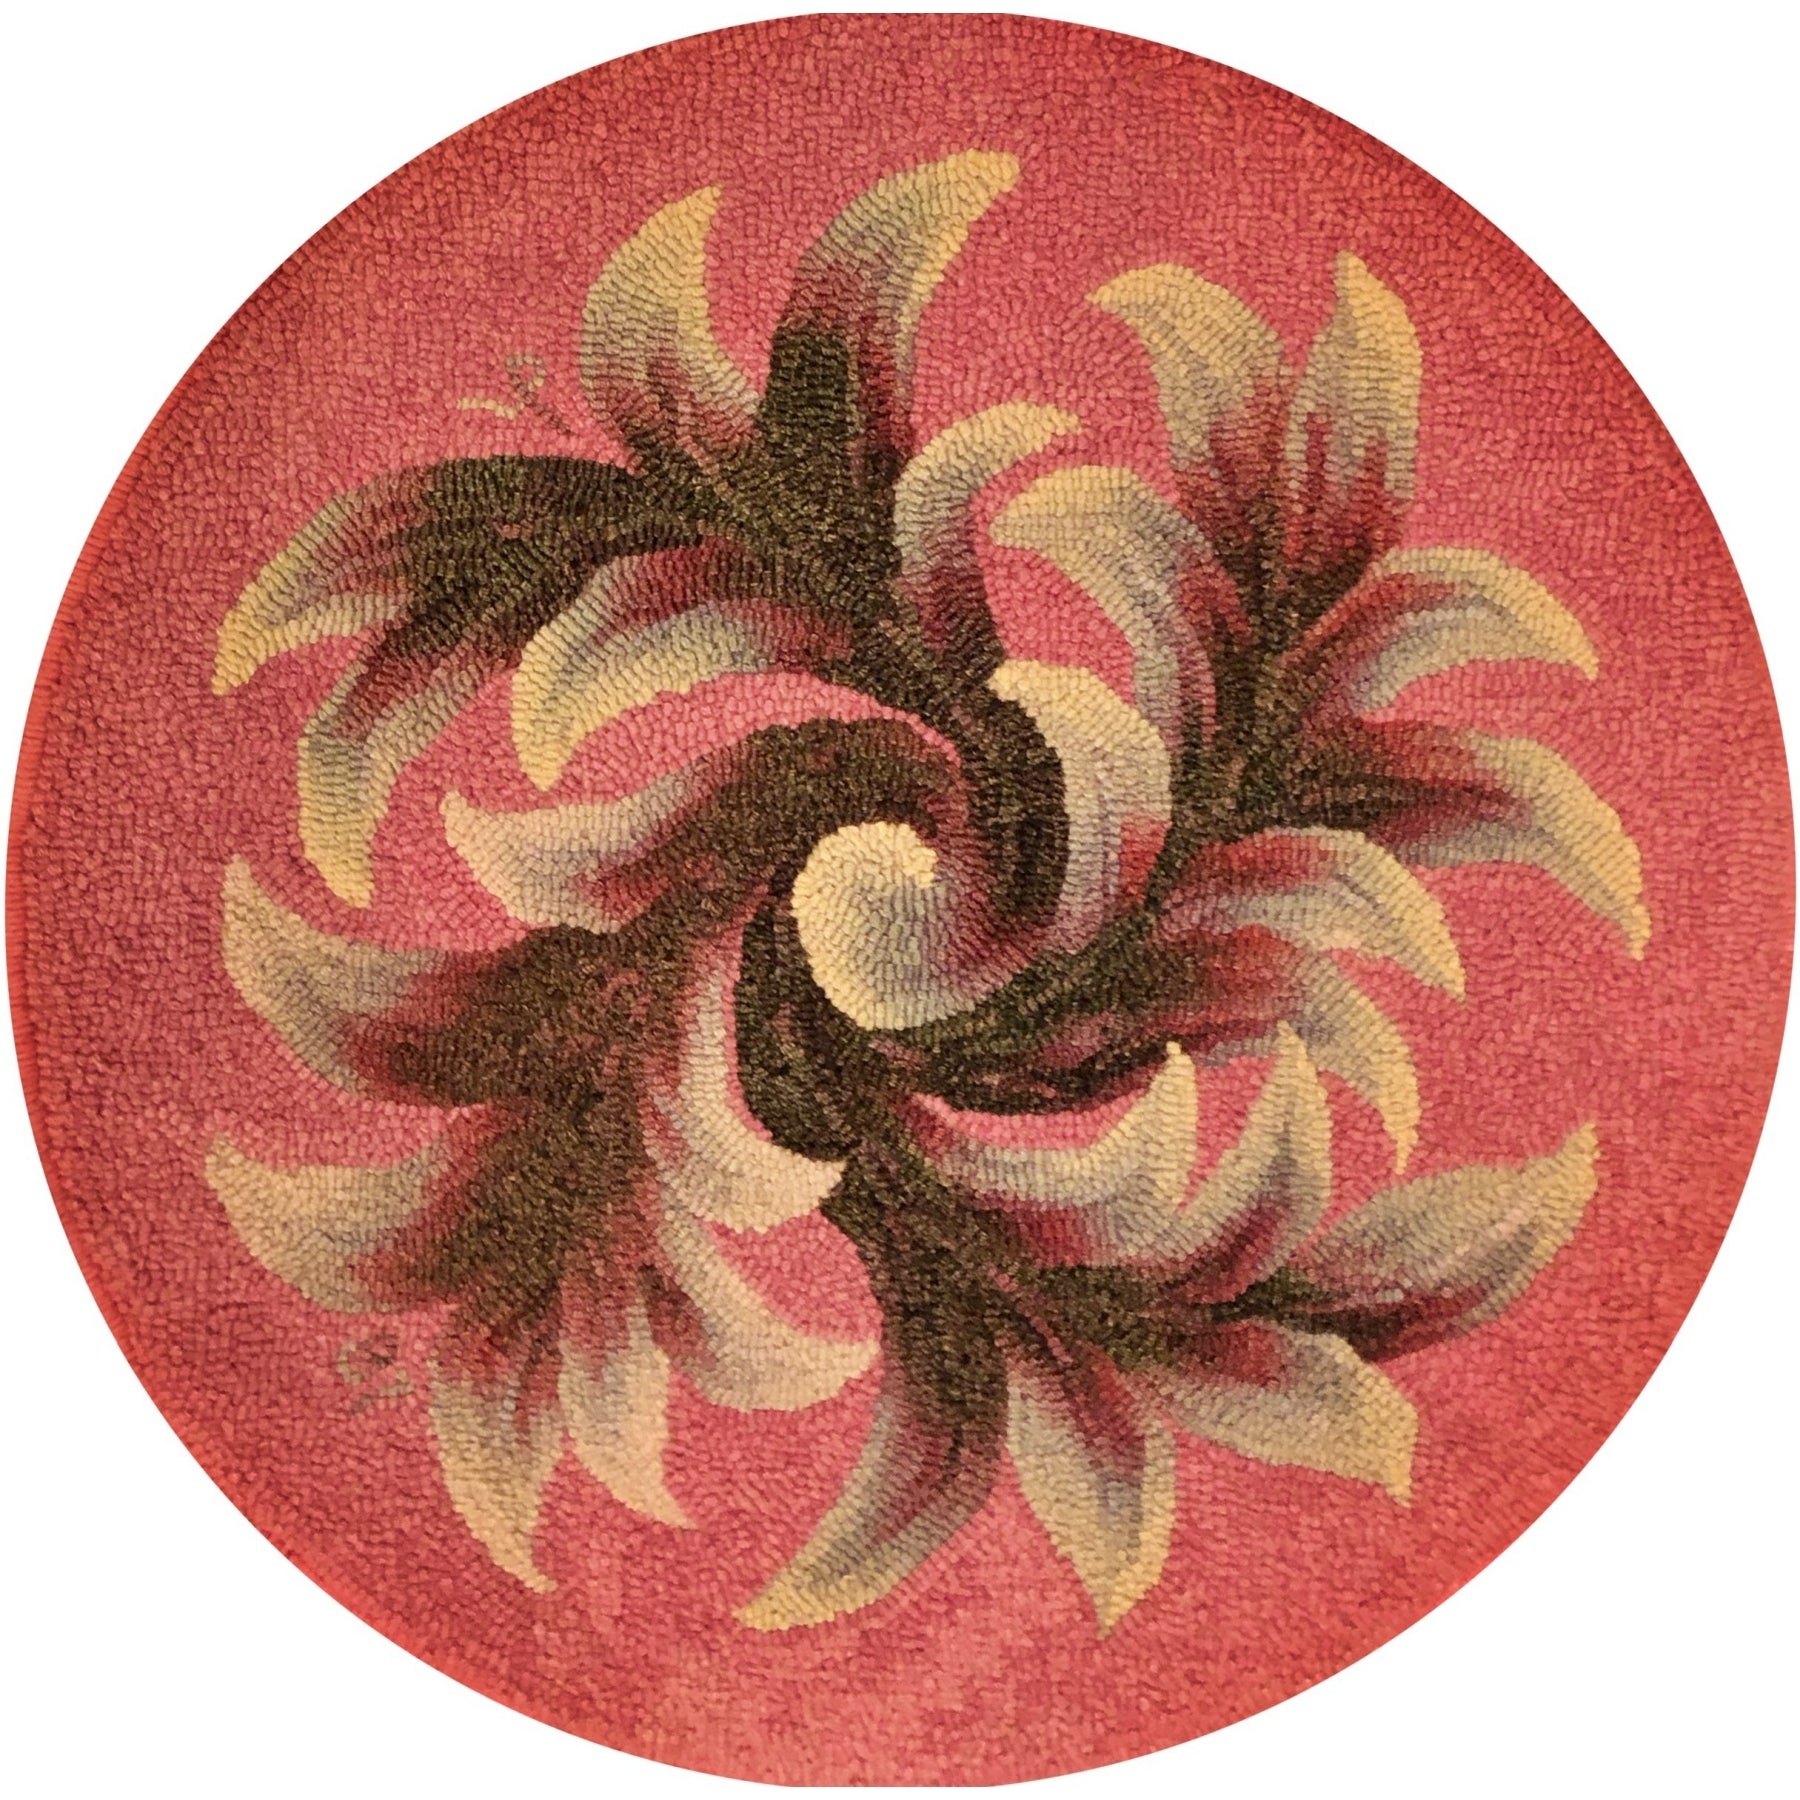 Pinwheel Scroll, rug hooked by Diana Foltz